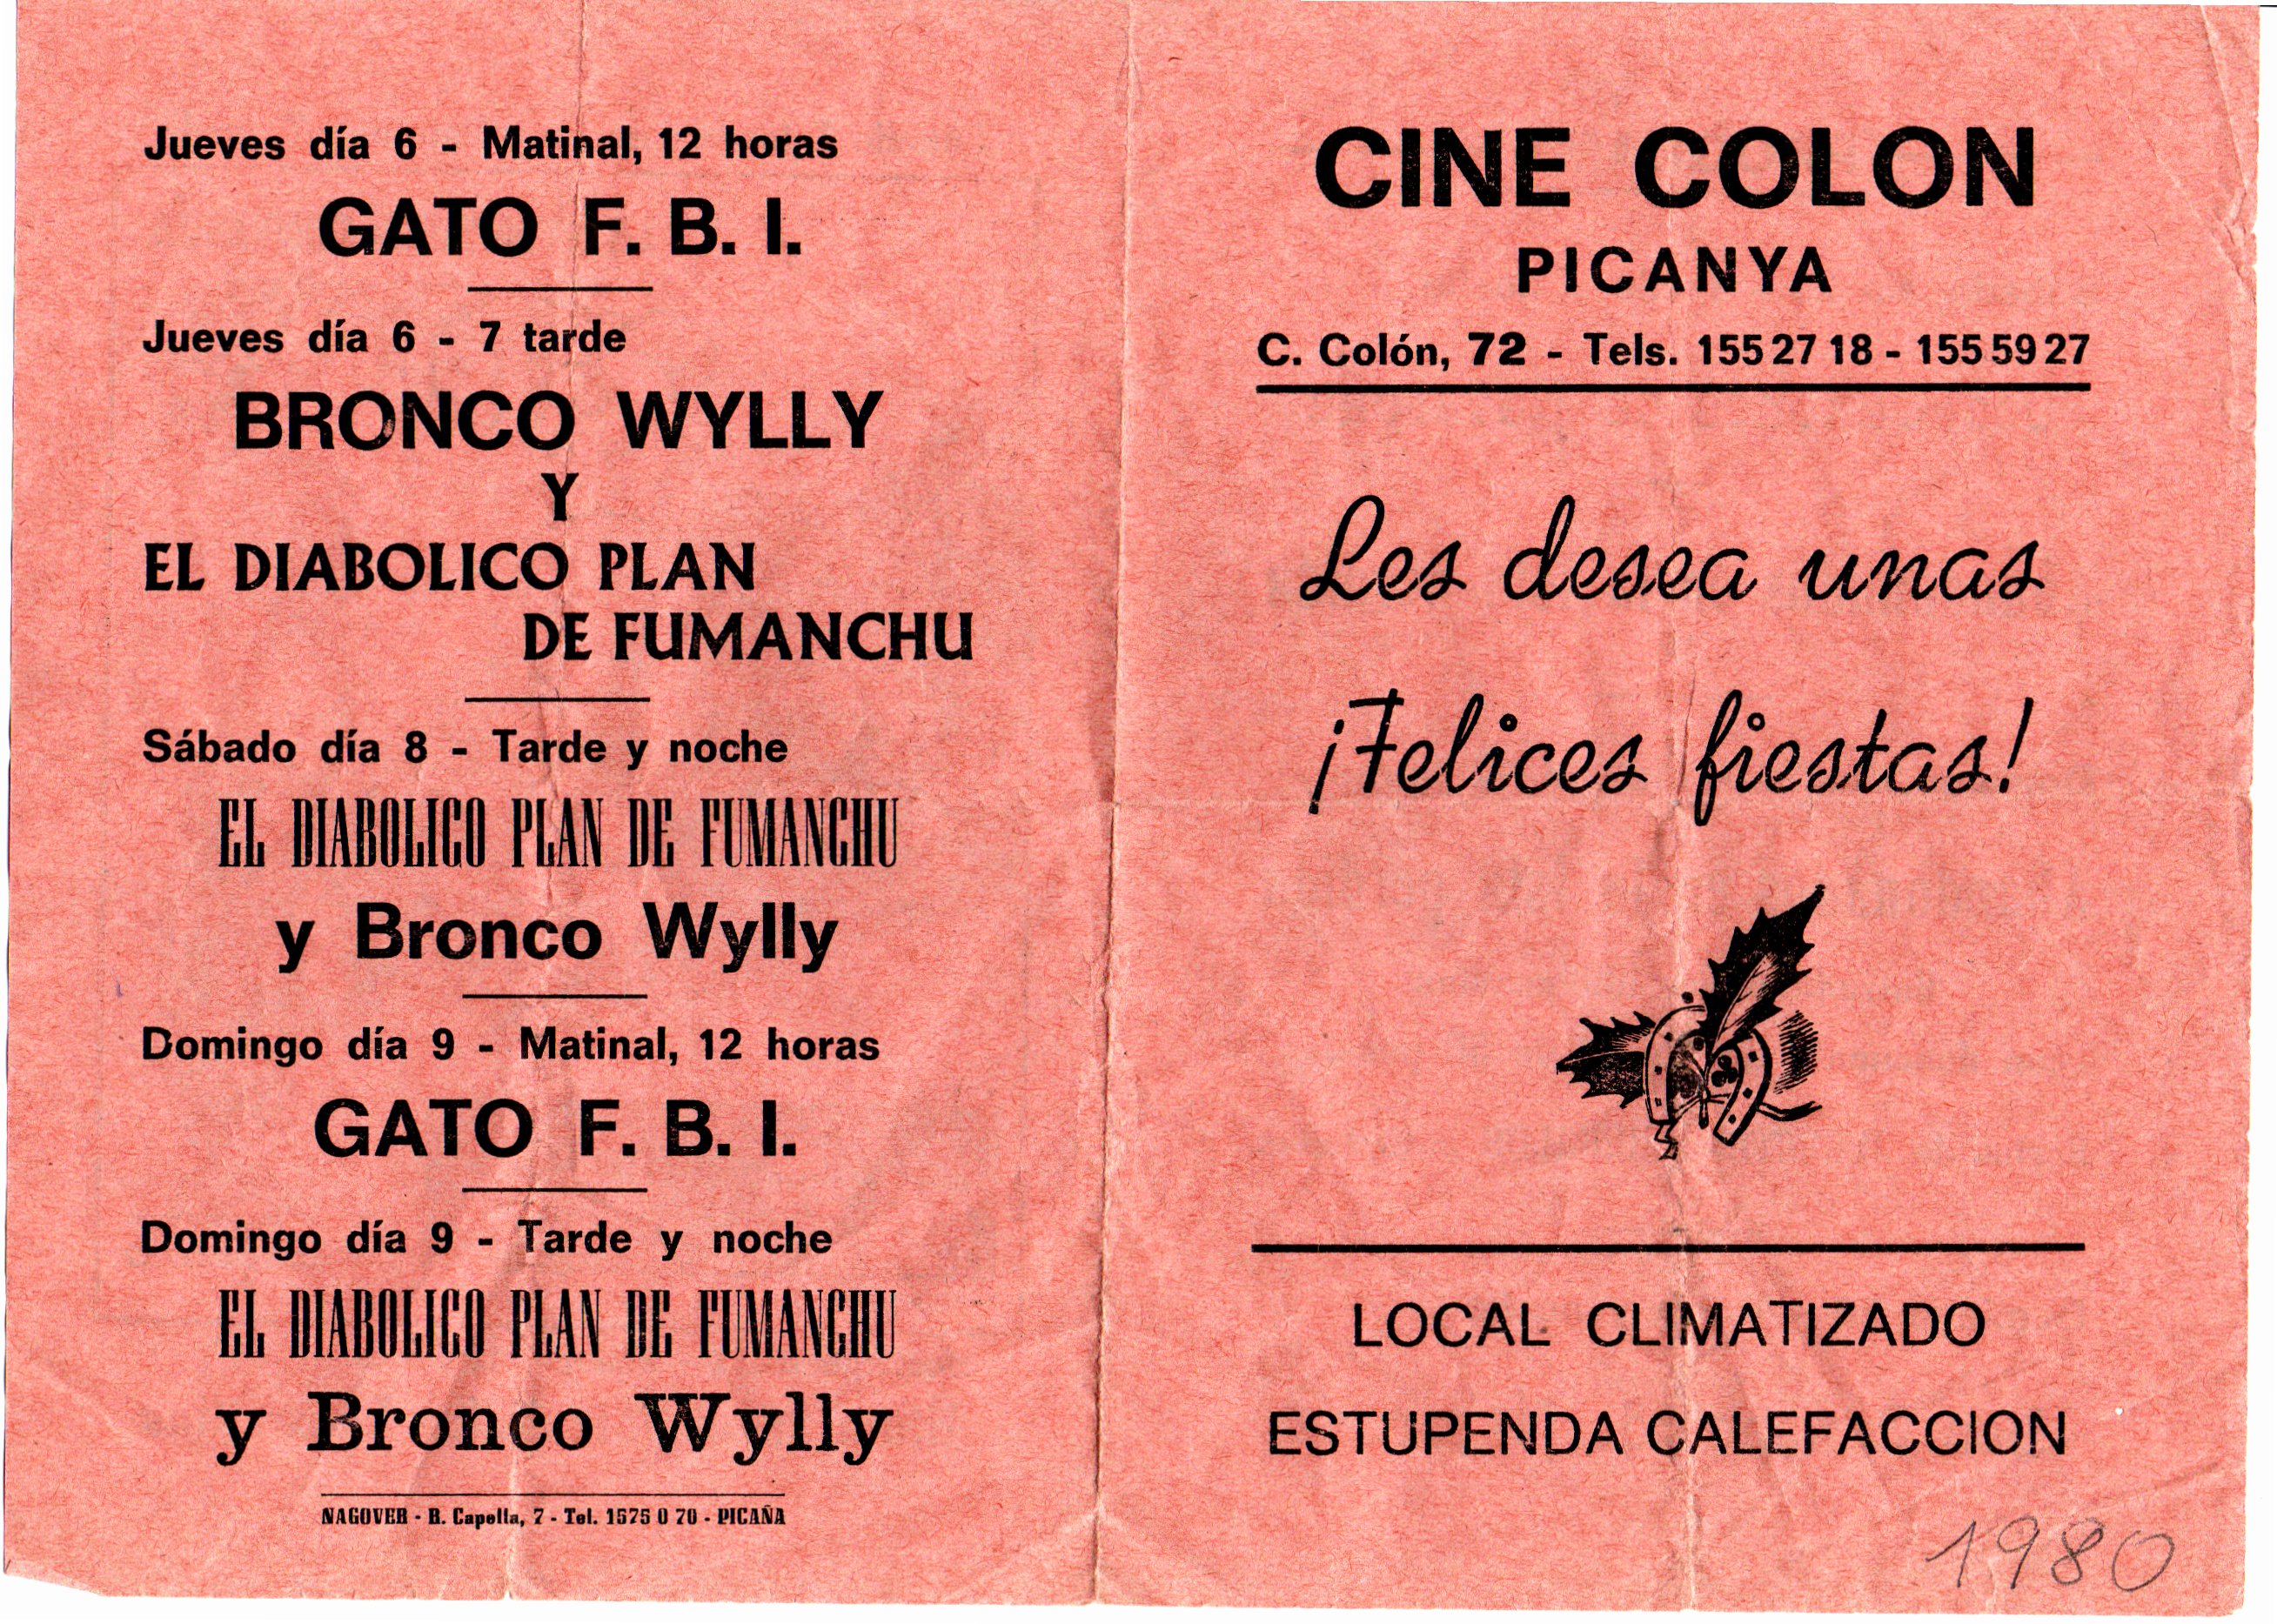 CEL-DO-A0471 - Cinema Colón